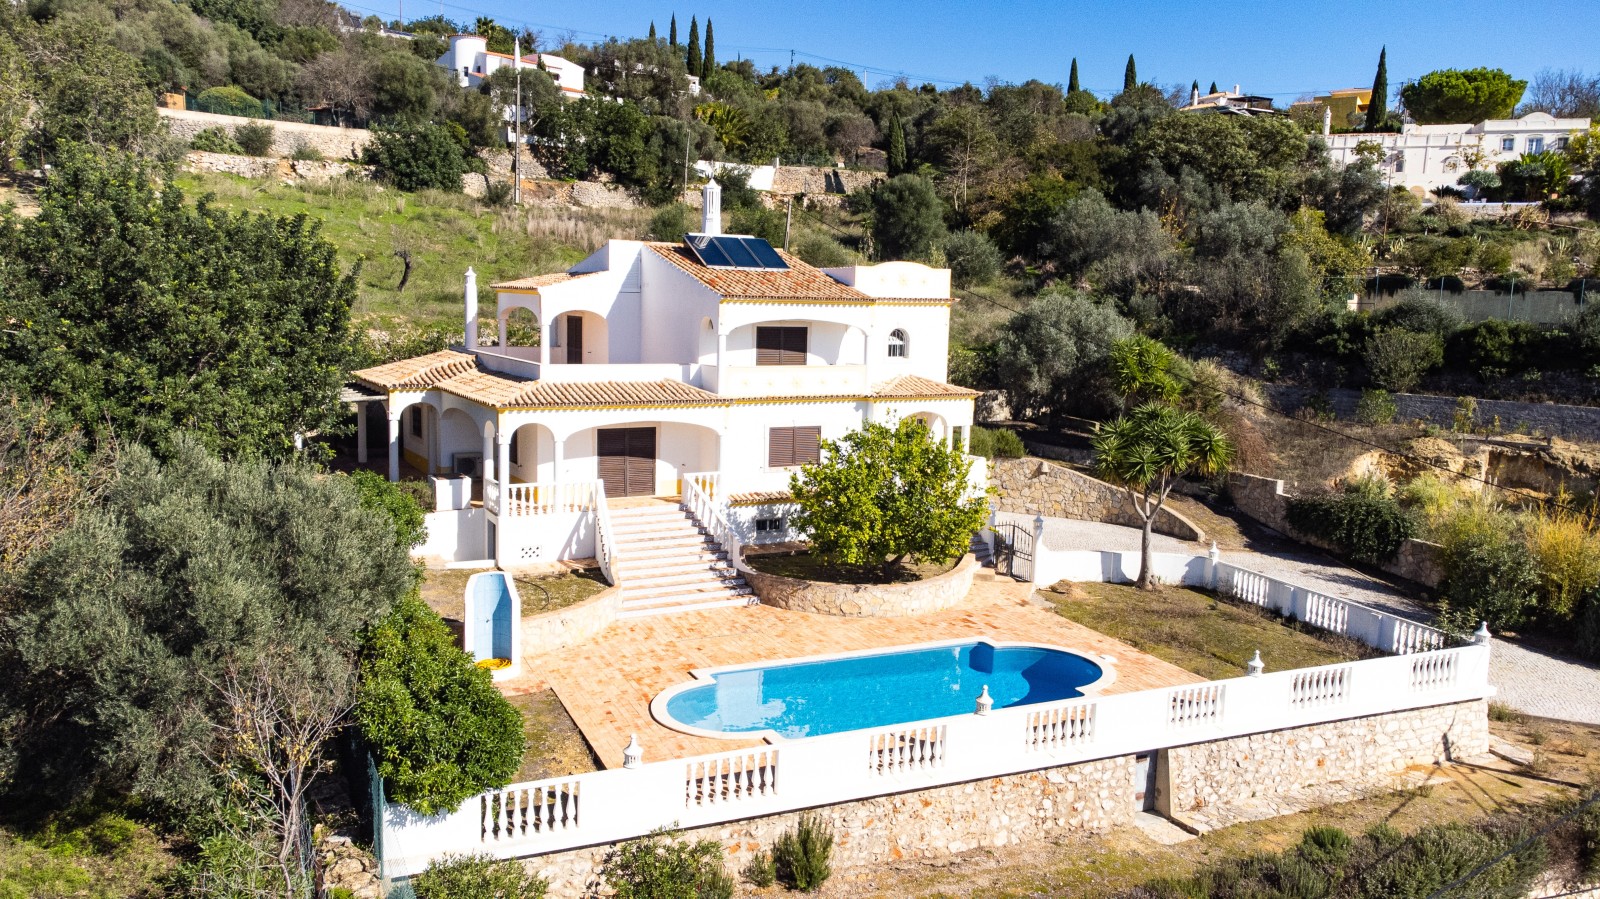 4-Bedroom Villa with swimming pool, for sale in Boliqueime, Loulé, Algarve_267419